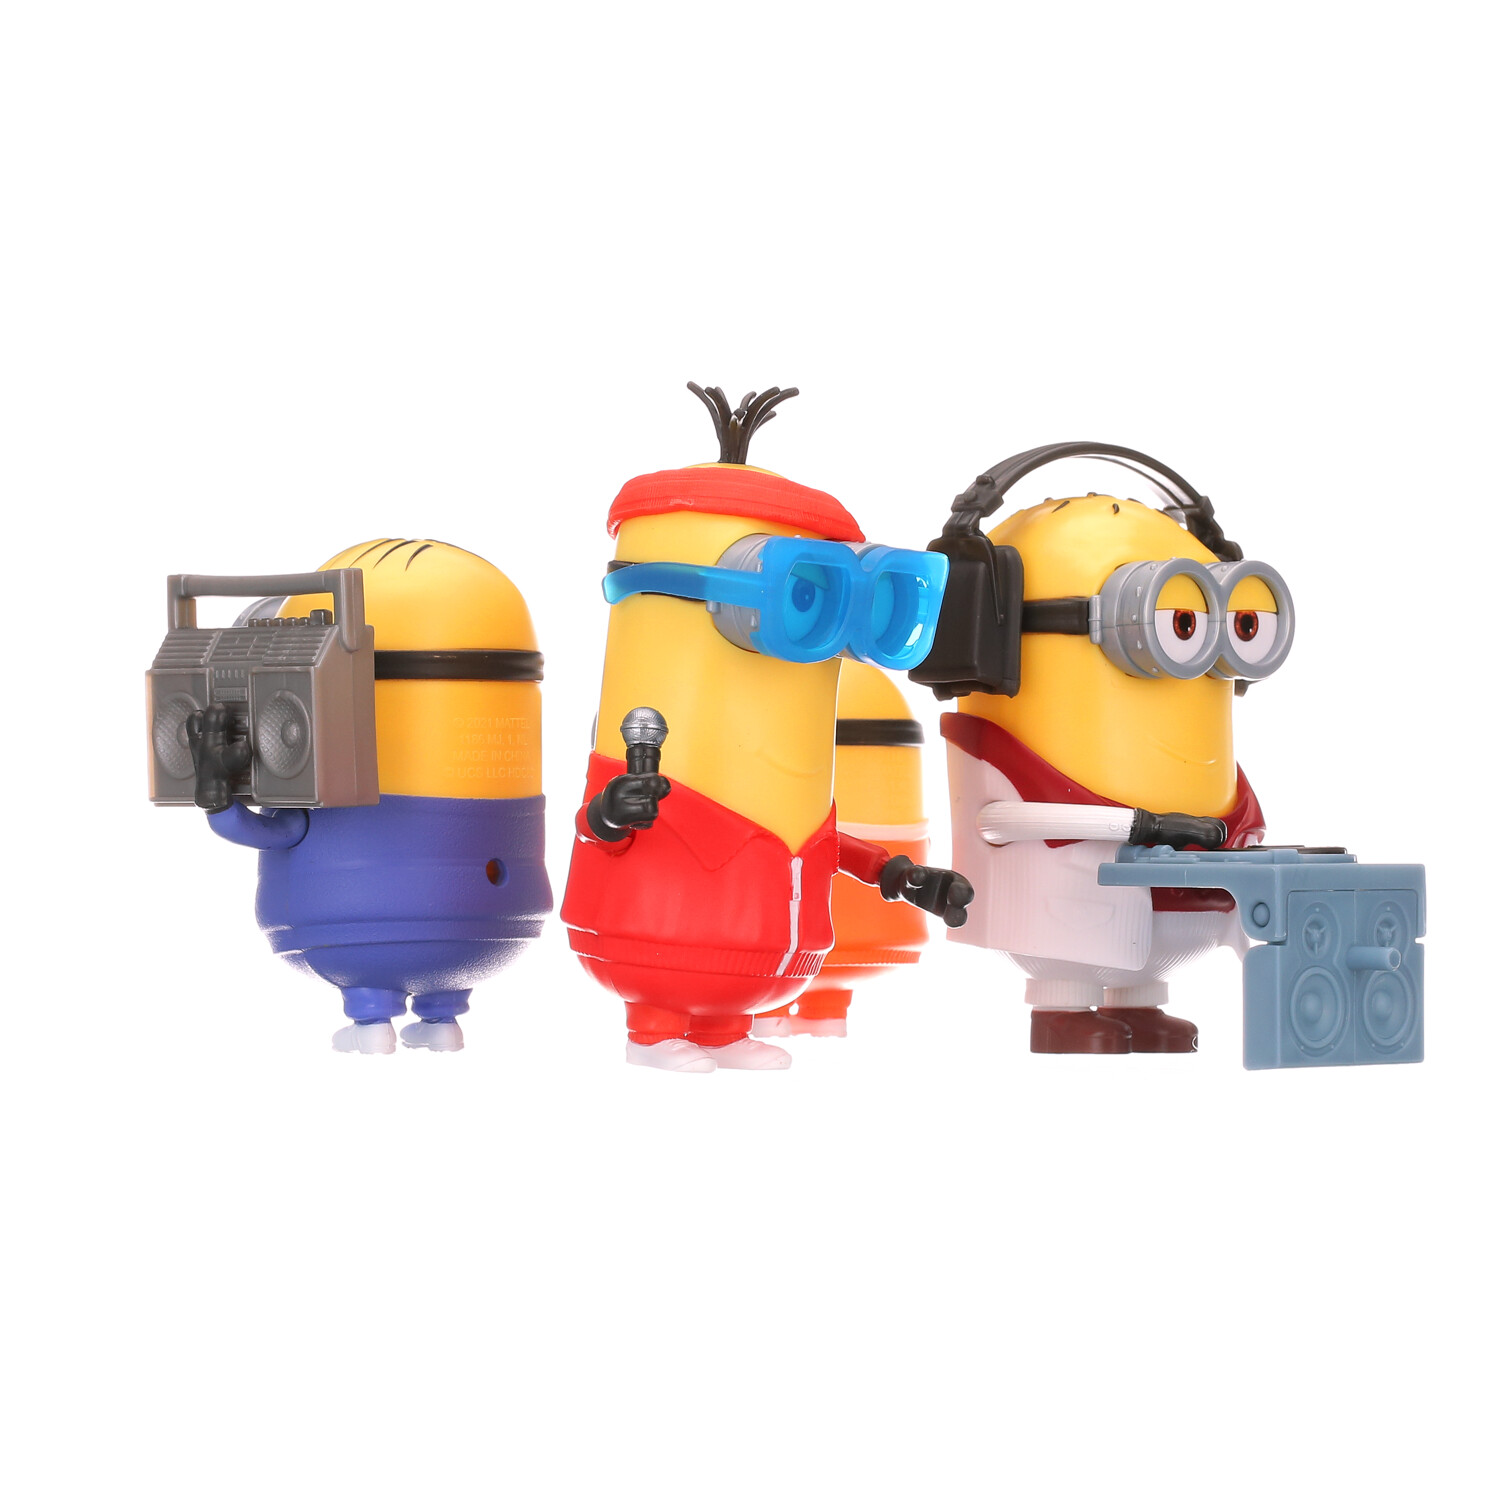  Boyz Toys Combo Lunch Set-Minions, 2-Piece, Yellow: Home &  Kitchen